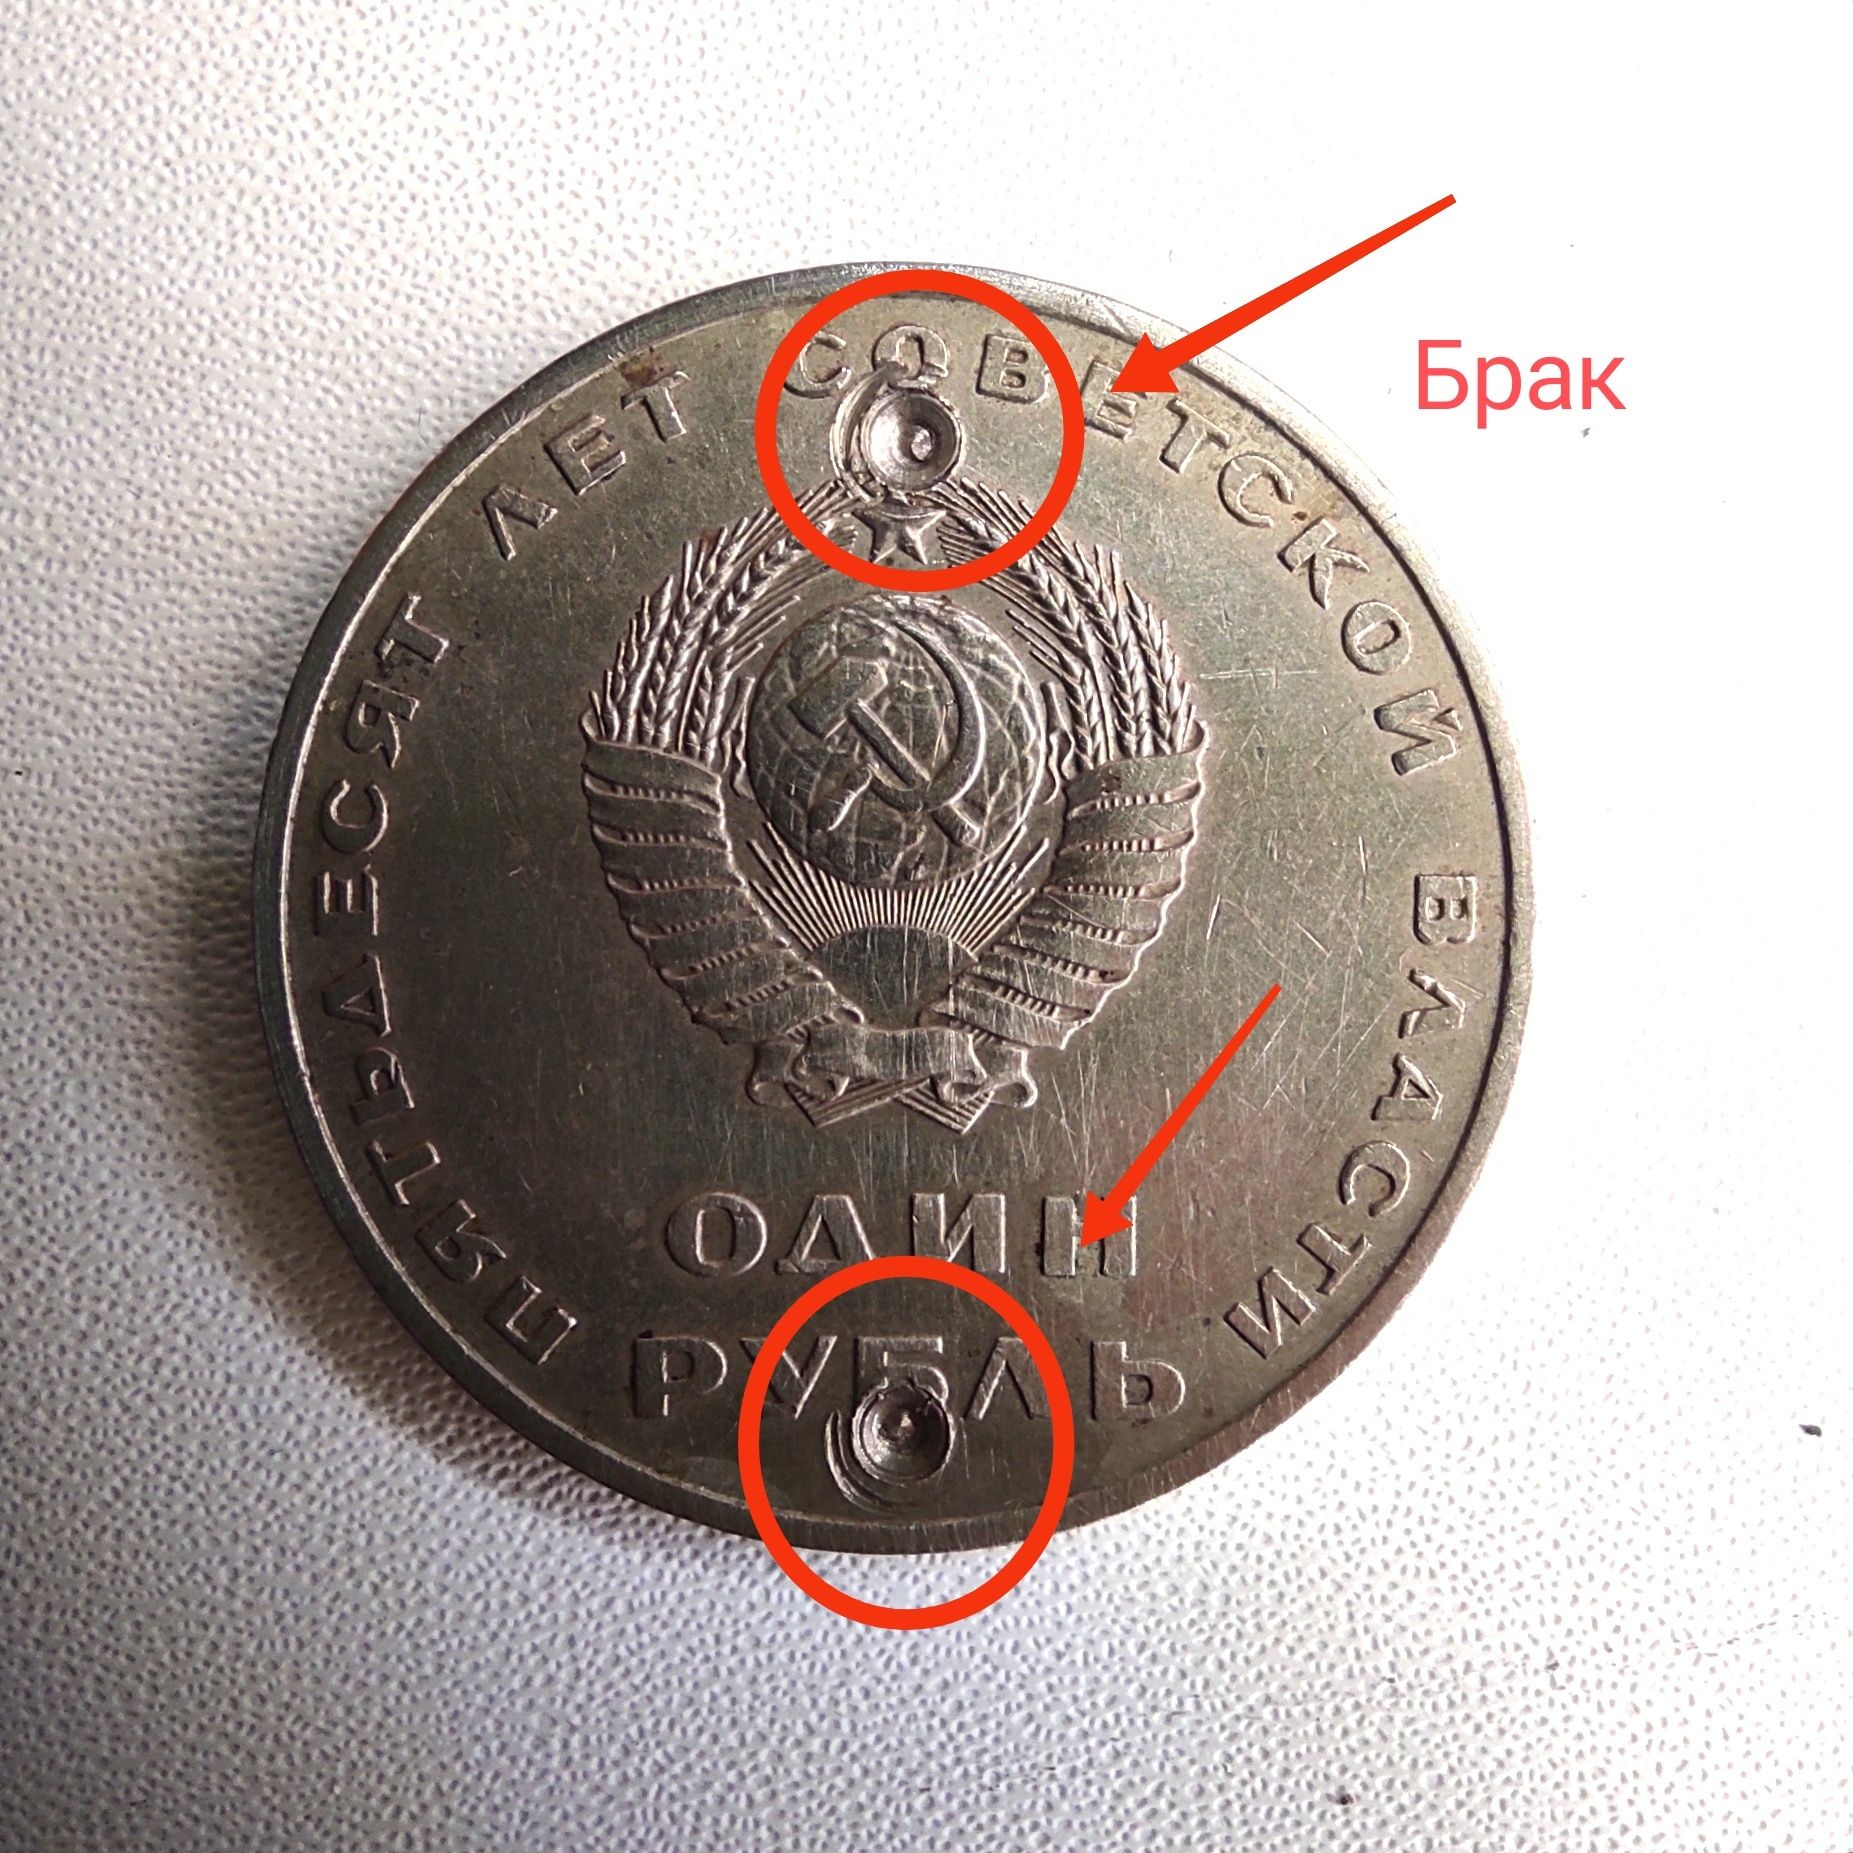 Продаю монету 1 рубль СССР с браком на аверсе